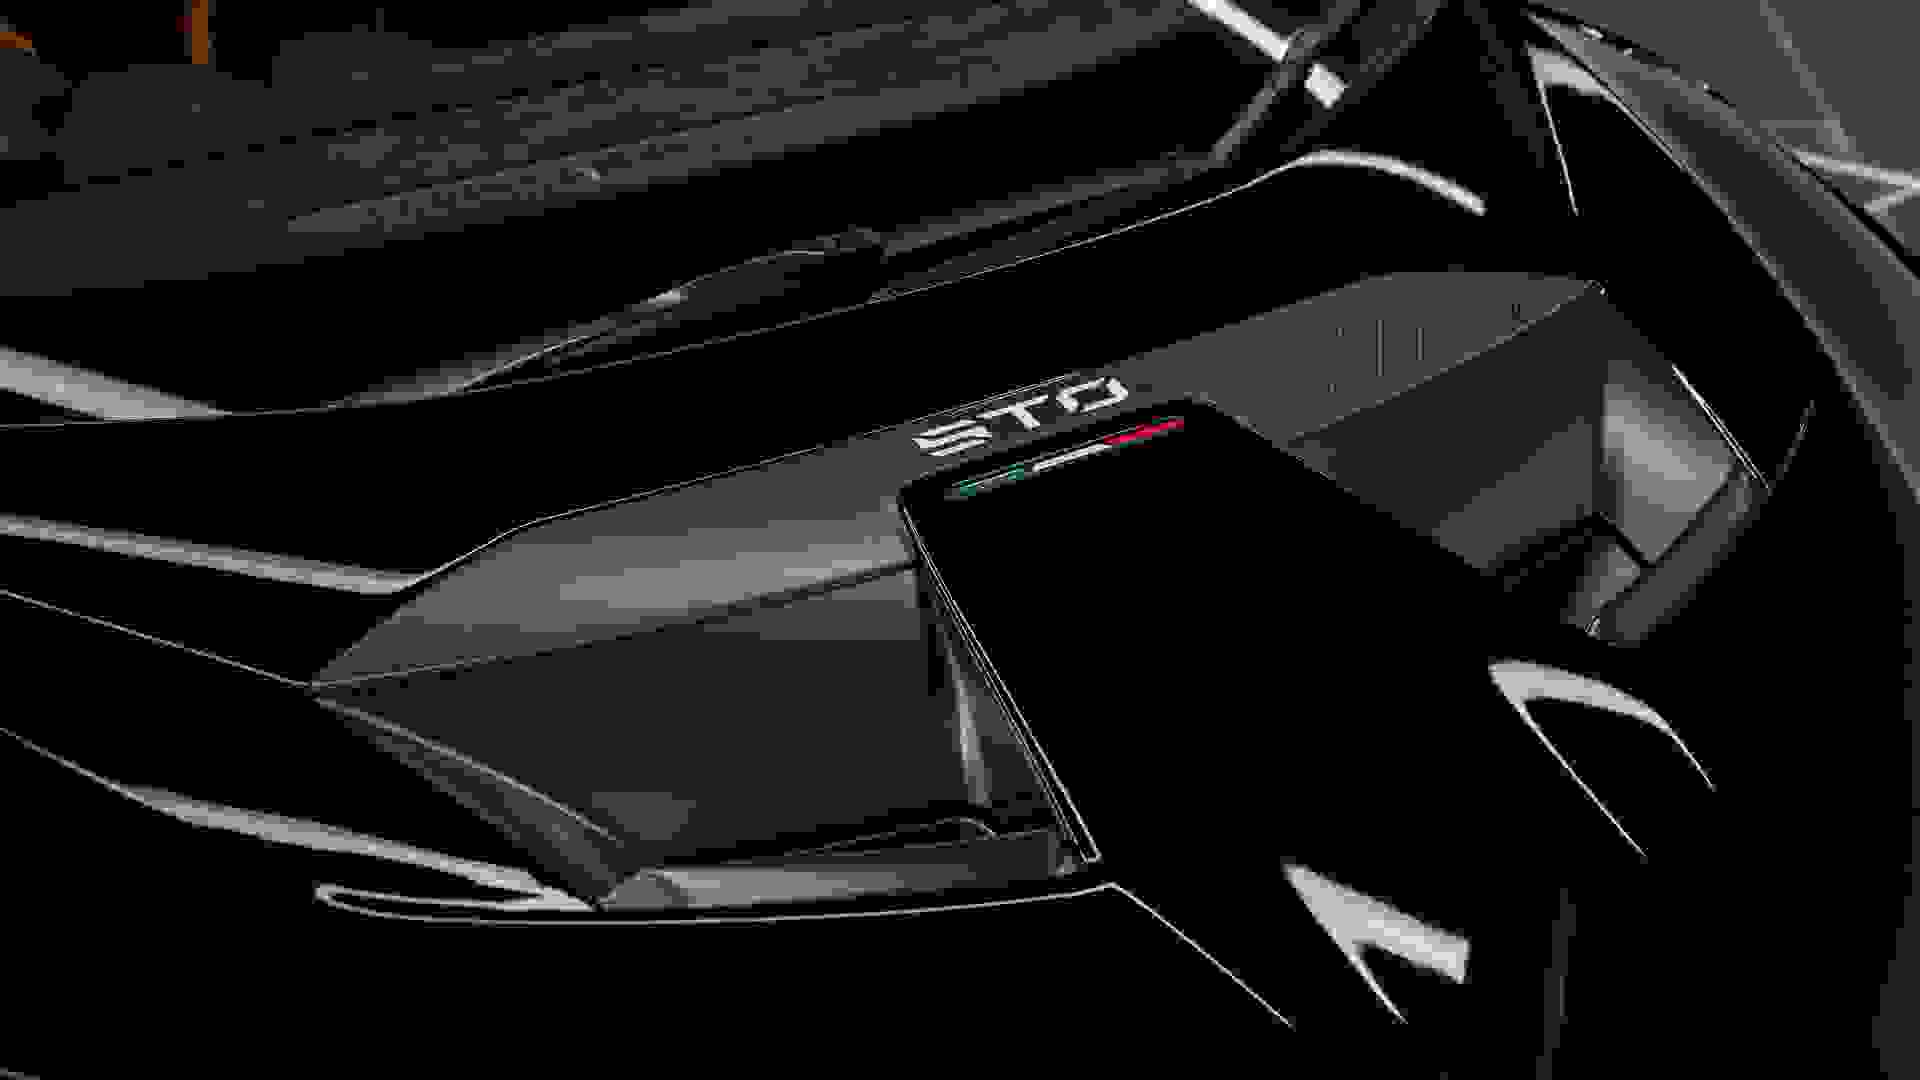 Lamborghini Huracan Photo e718b323-2883-4d0c-9133-4fde4a3d5e13.jpg